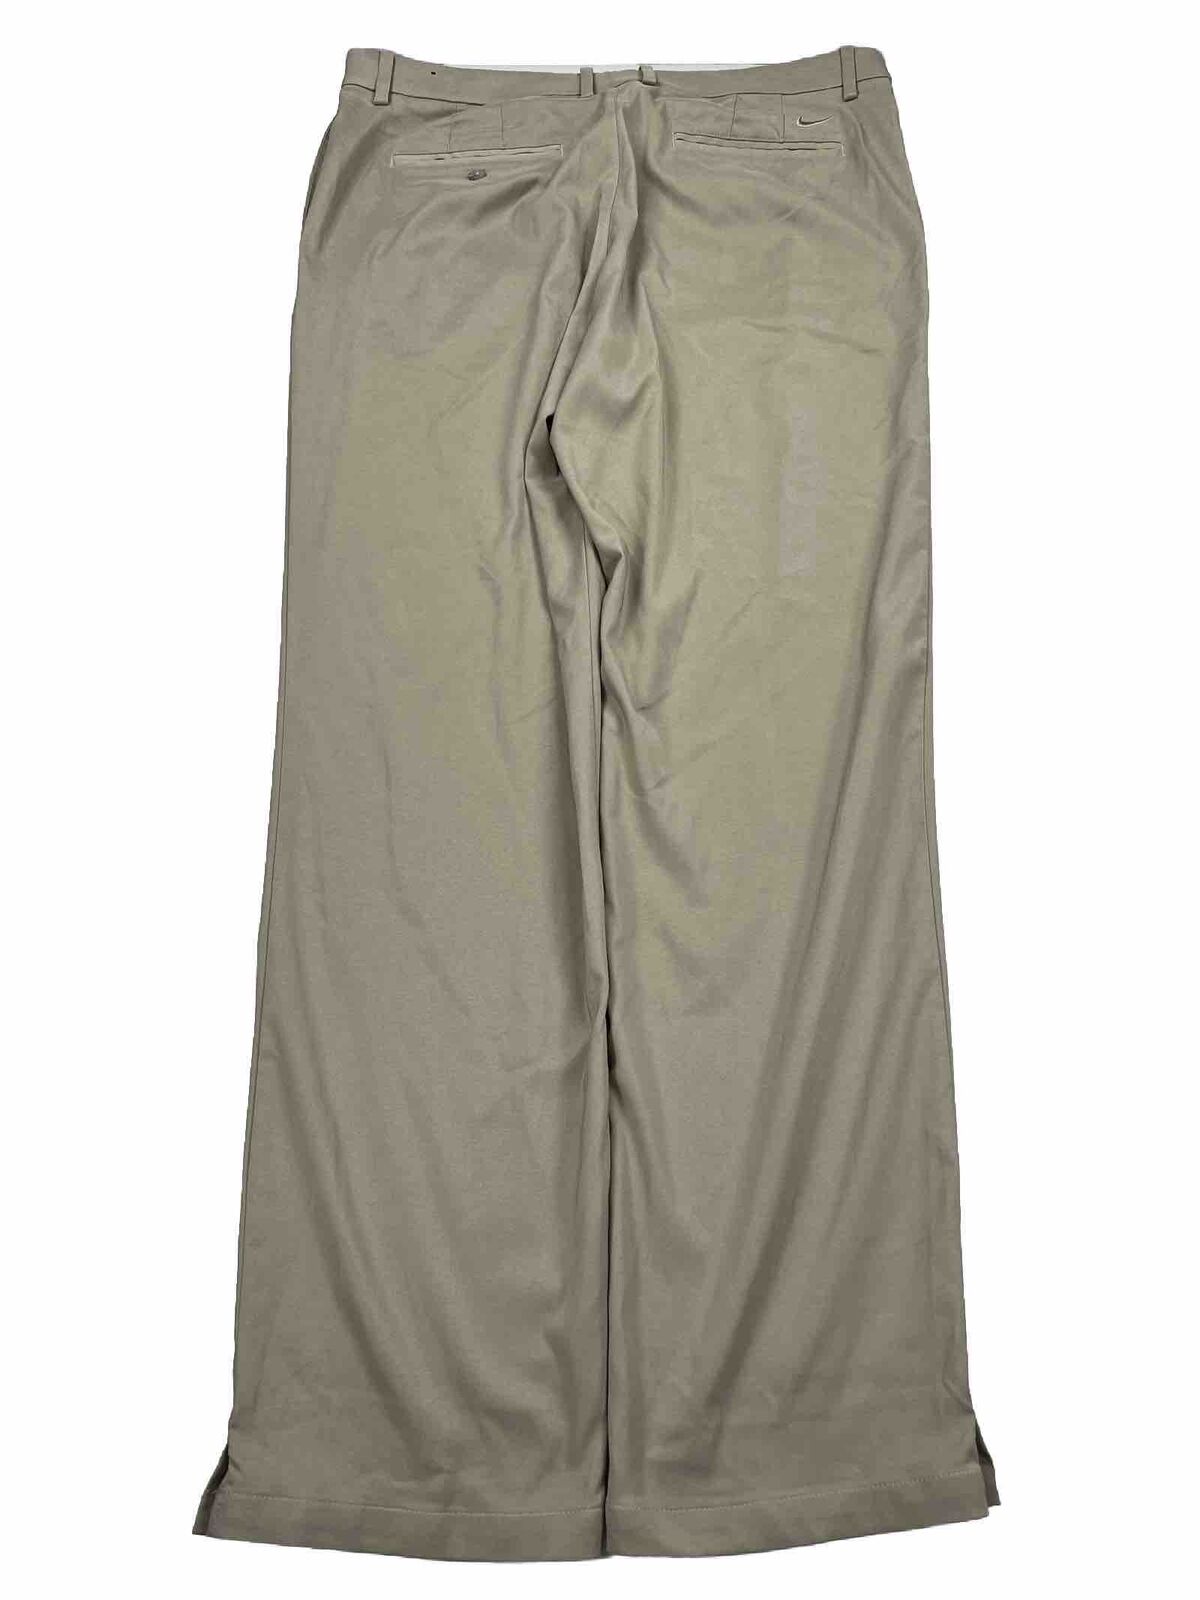 Nike Men's Beige Flex Pant Core Chino Golf Pants - 38x34